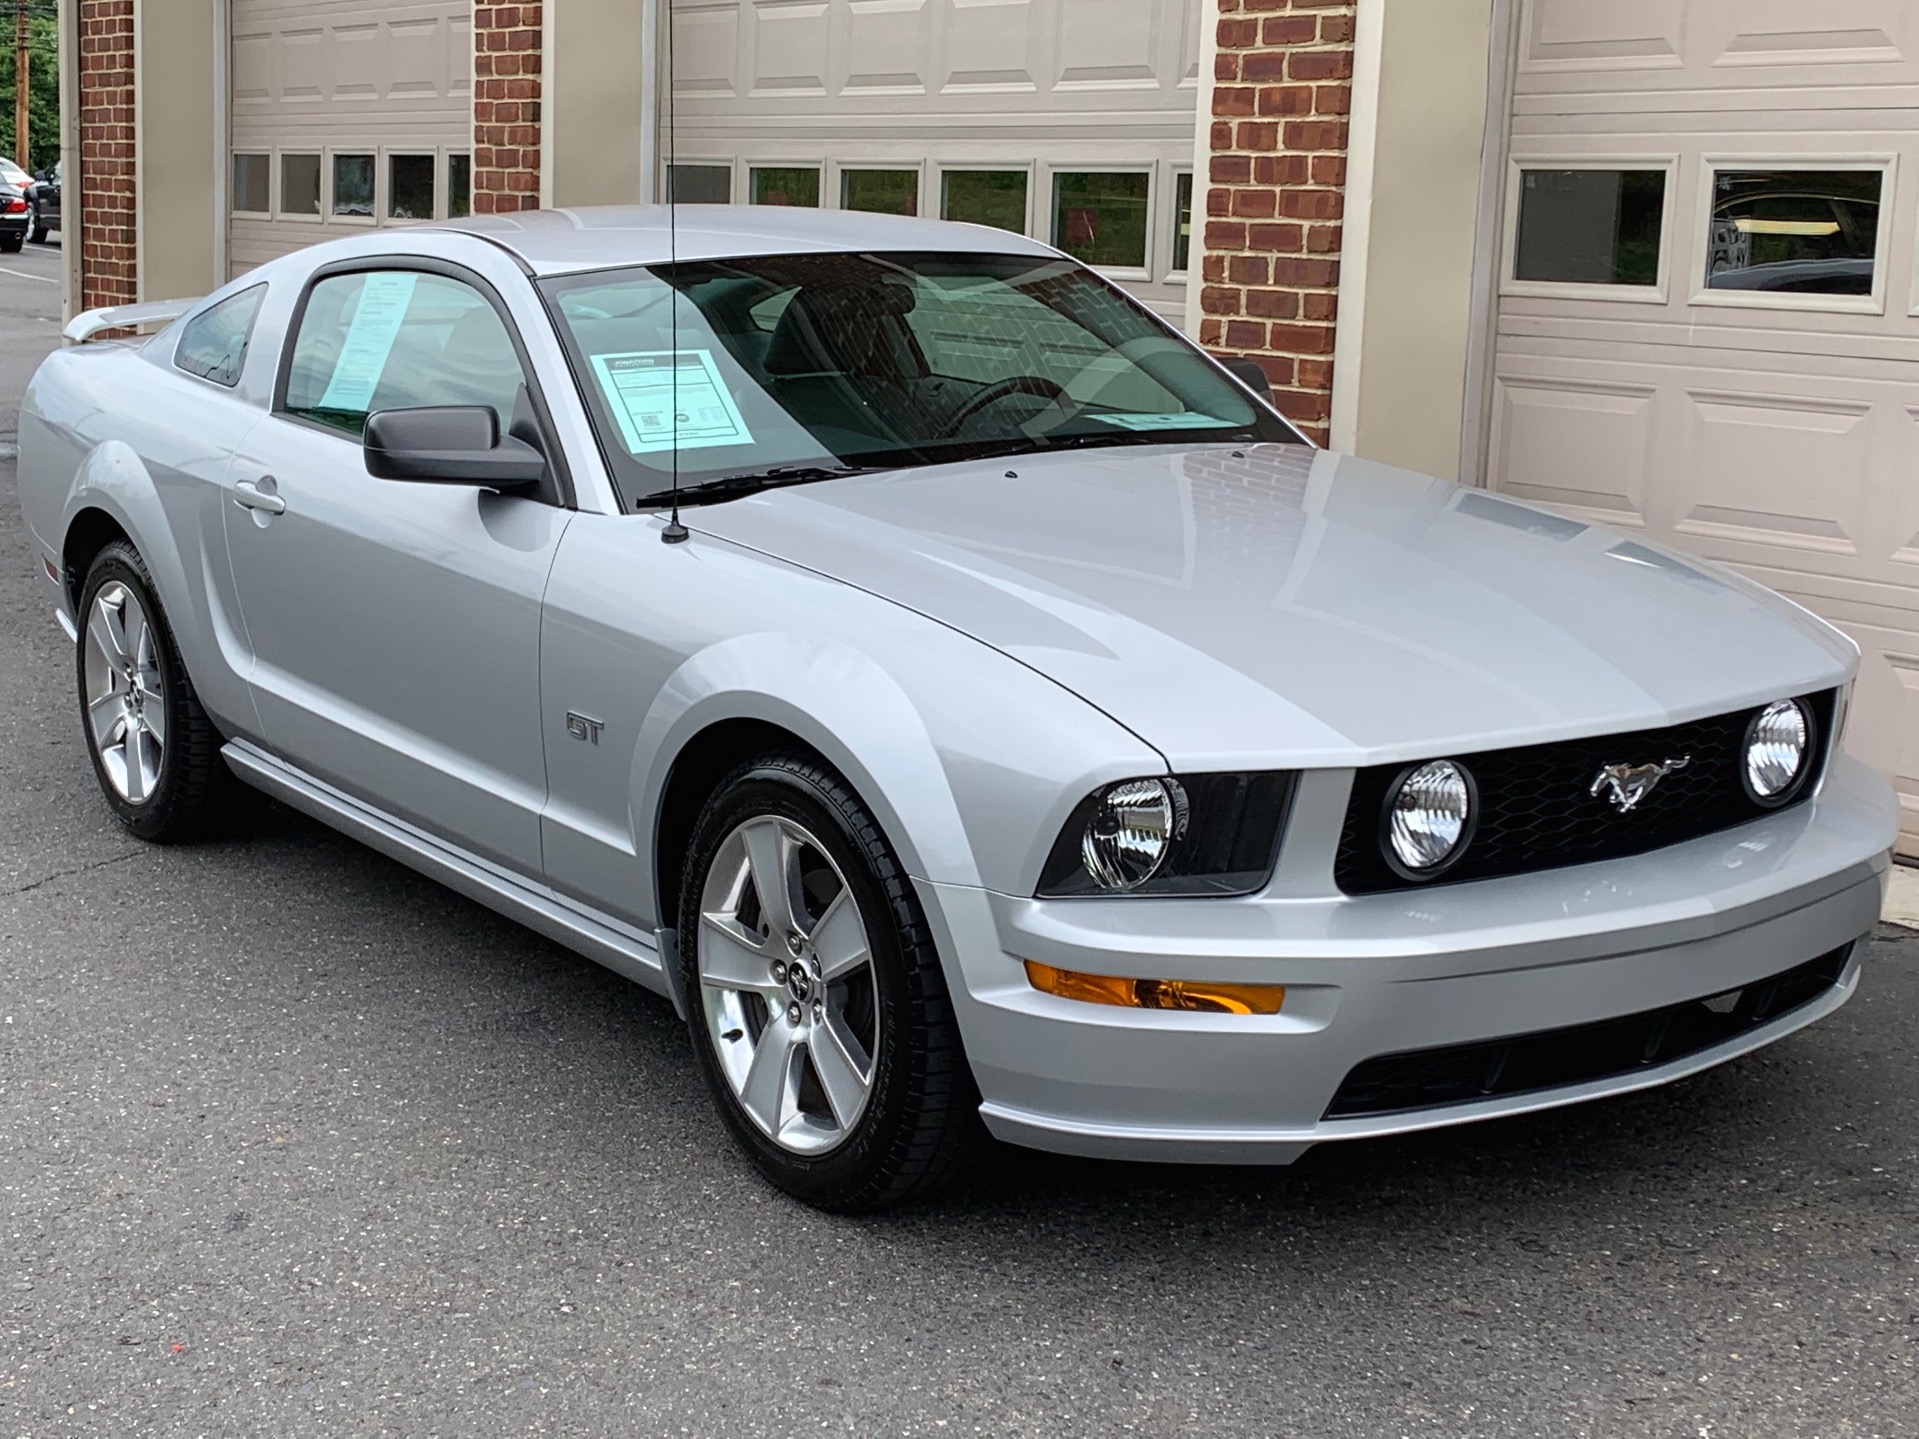 Used-2006-Ford-Mustang-GT-Premium-1594134941.jpg